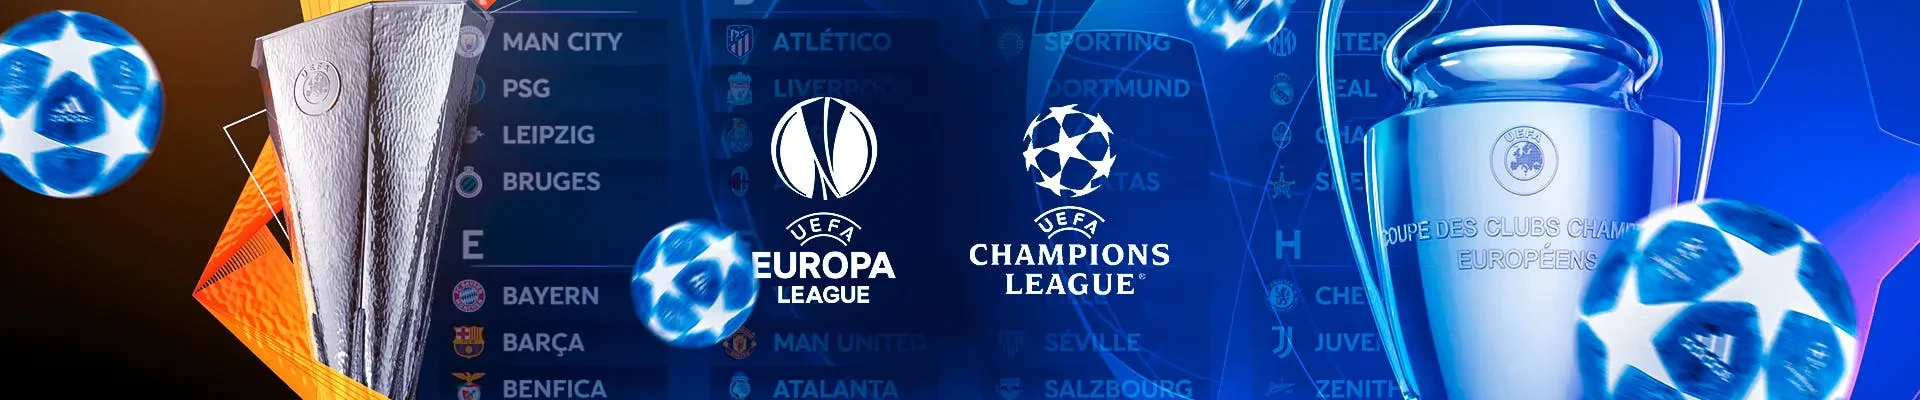 Europa League Champions League Groups